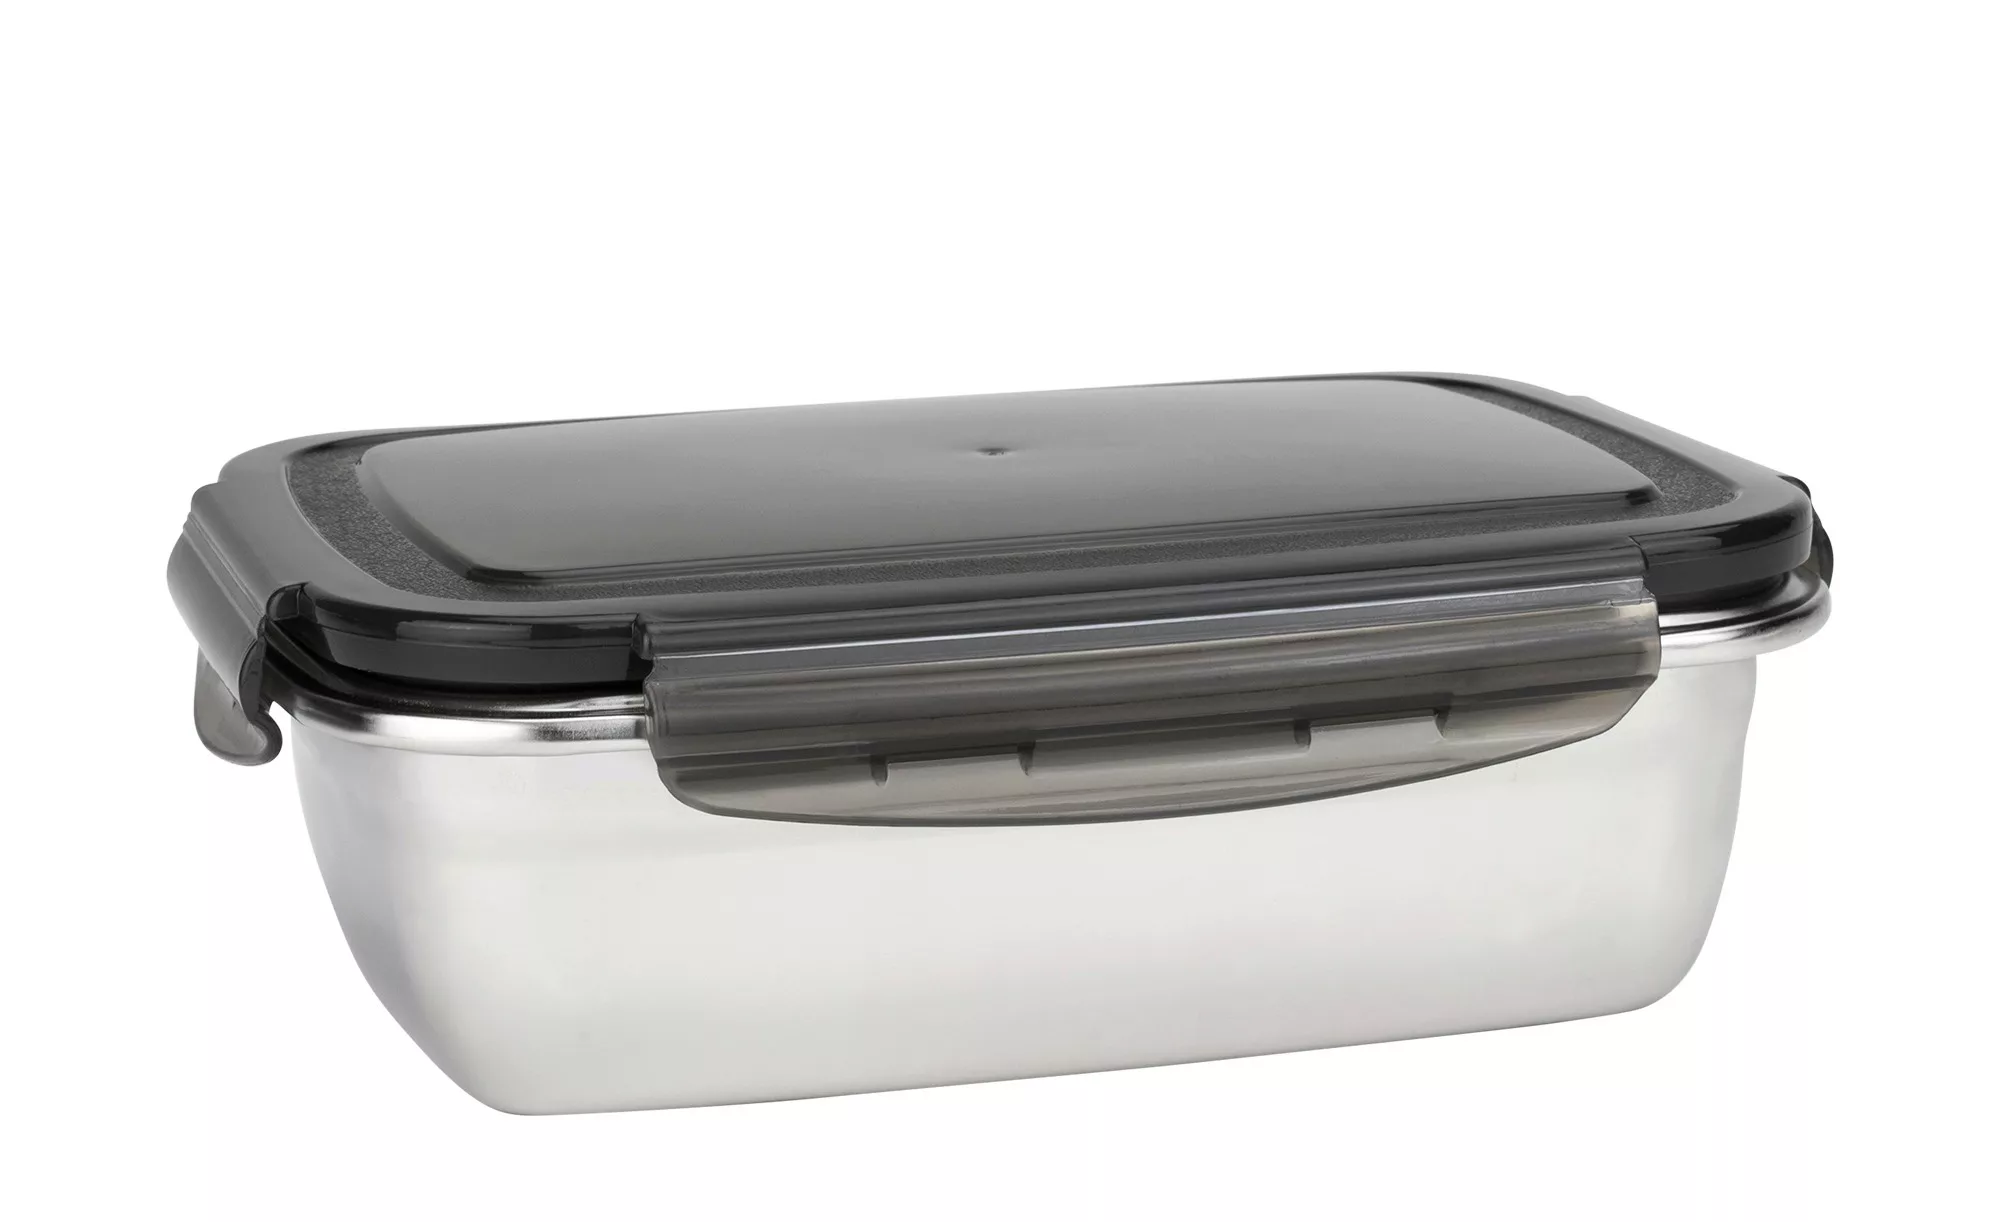 Justinus Lunchbox  Lifestyle - silber - Edelstahl, Silikon - 19,5 cm - 6 cm günstig online kaufen